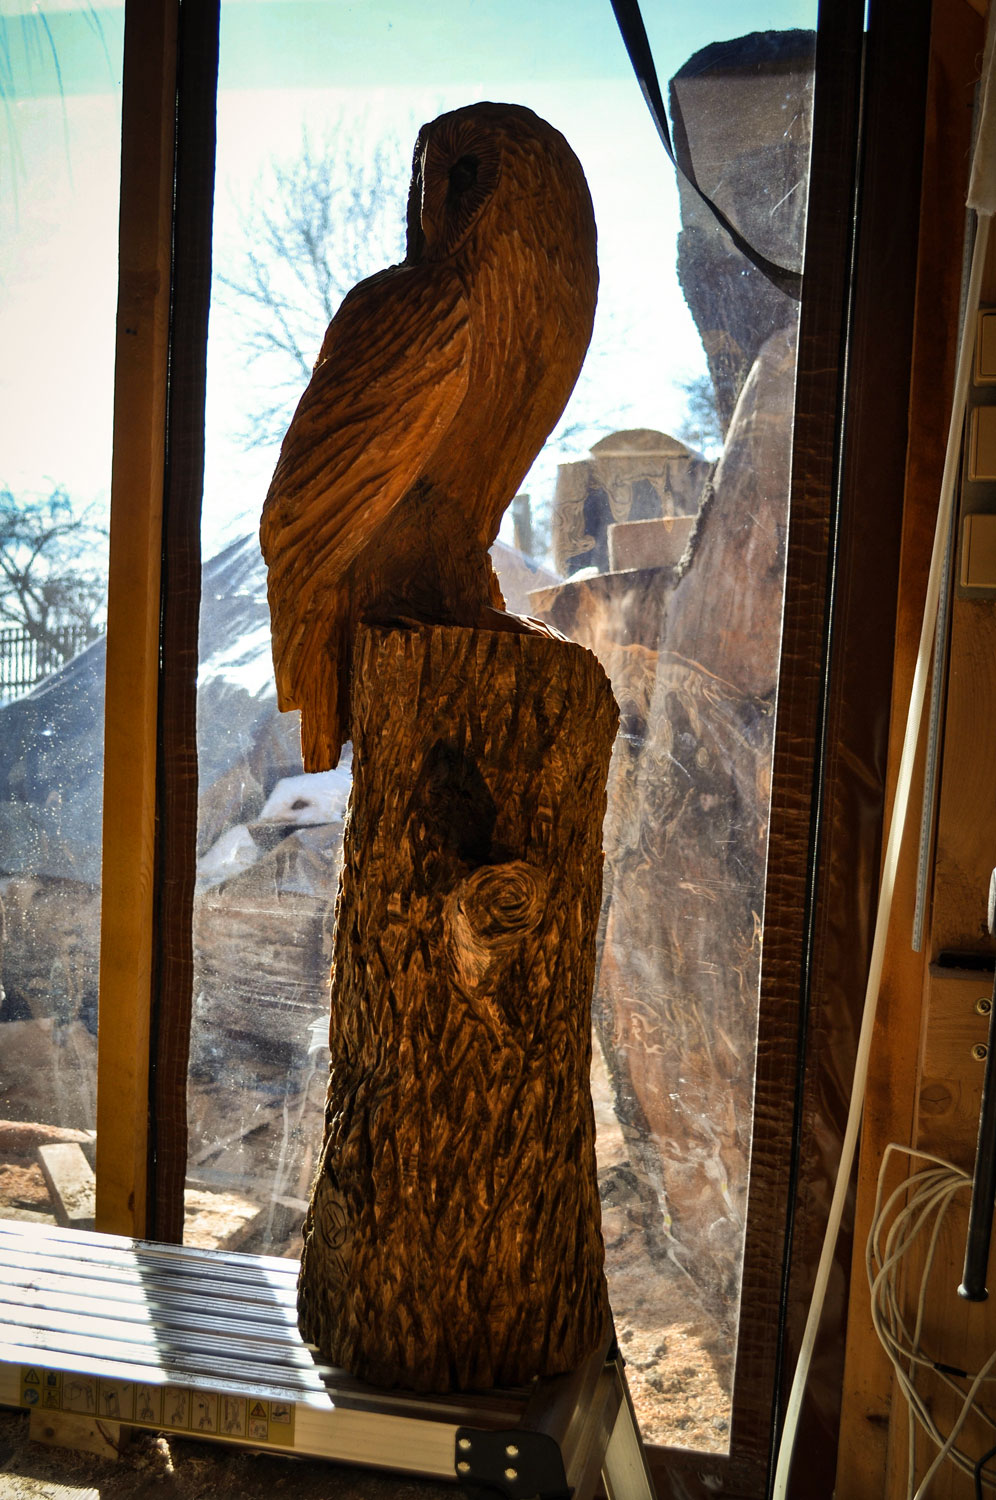 rezbar-drevorezba-vyrezavani-carving-wood-drevo-socha-bysta-sova_palena-110cm-radekzdrazil-20210220-07